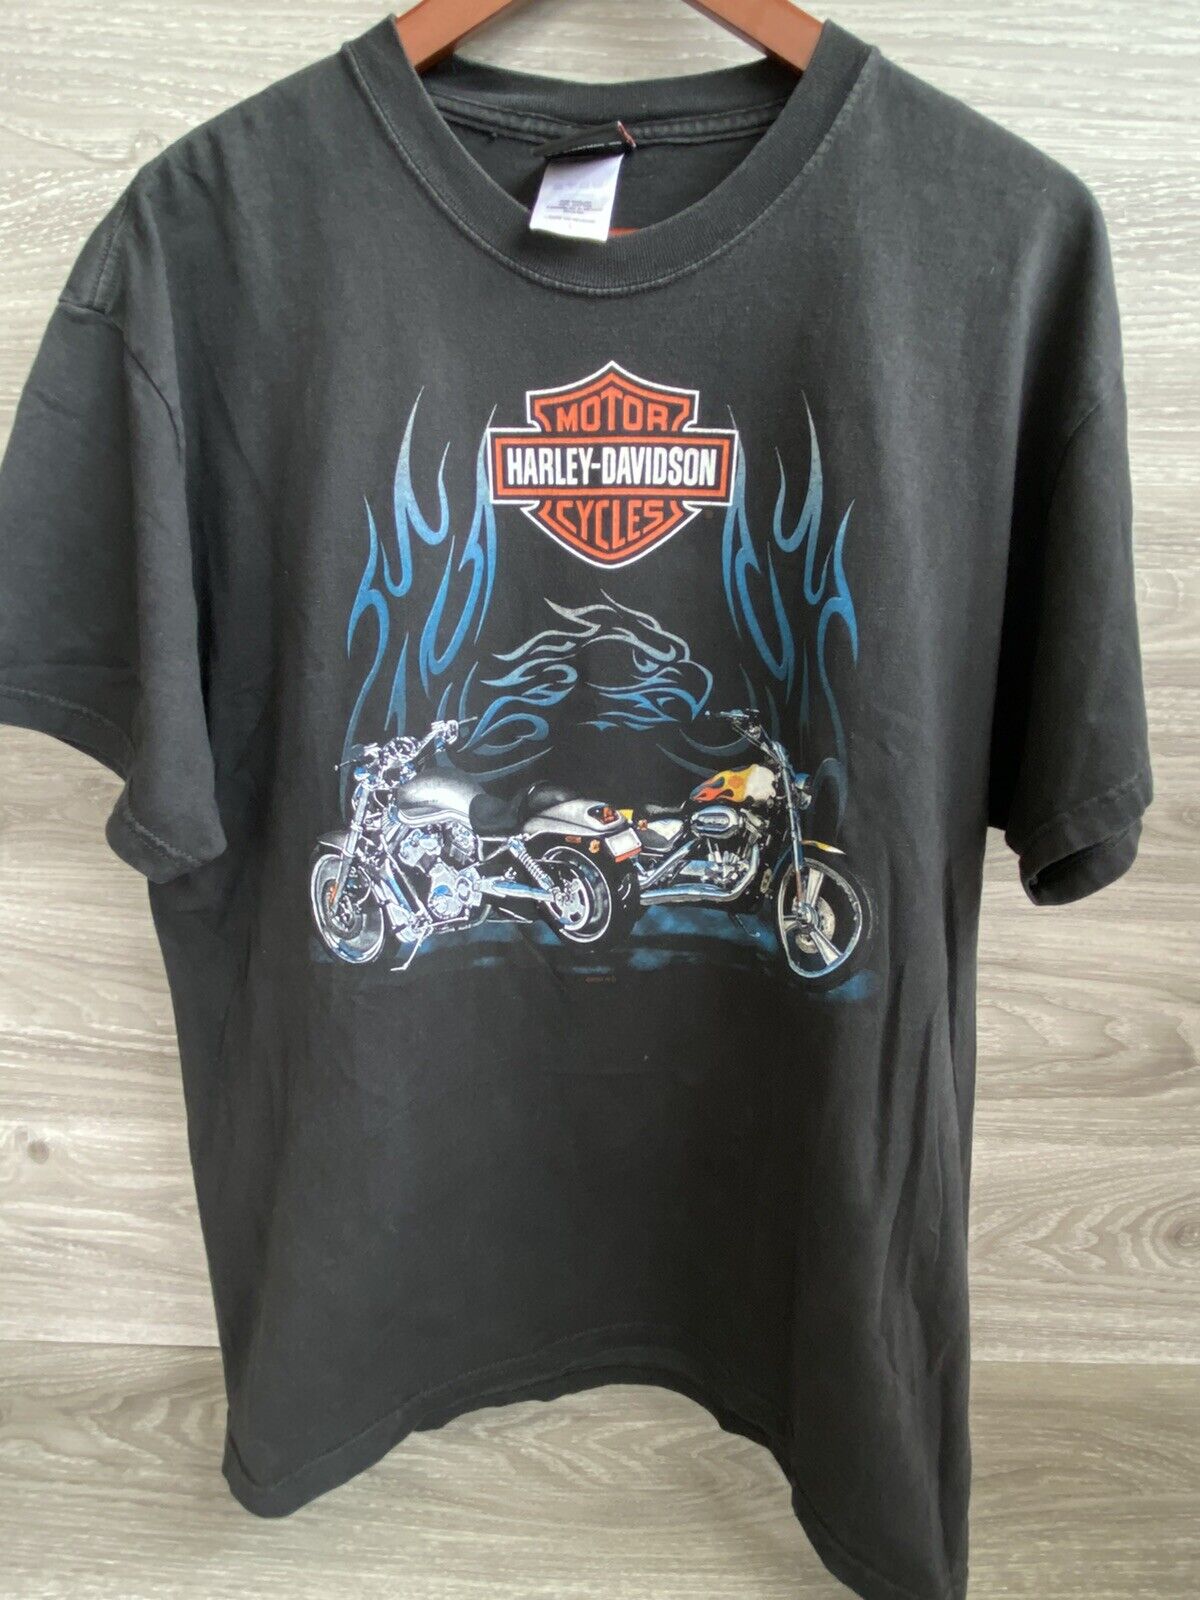 2004 Harley Davidson Wauwatosa Wisconsin Shirt Size Large